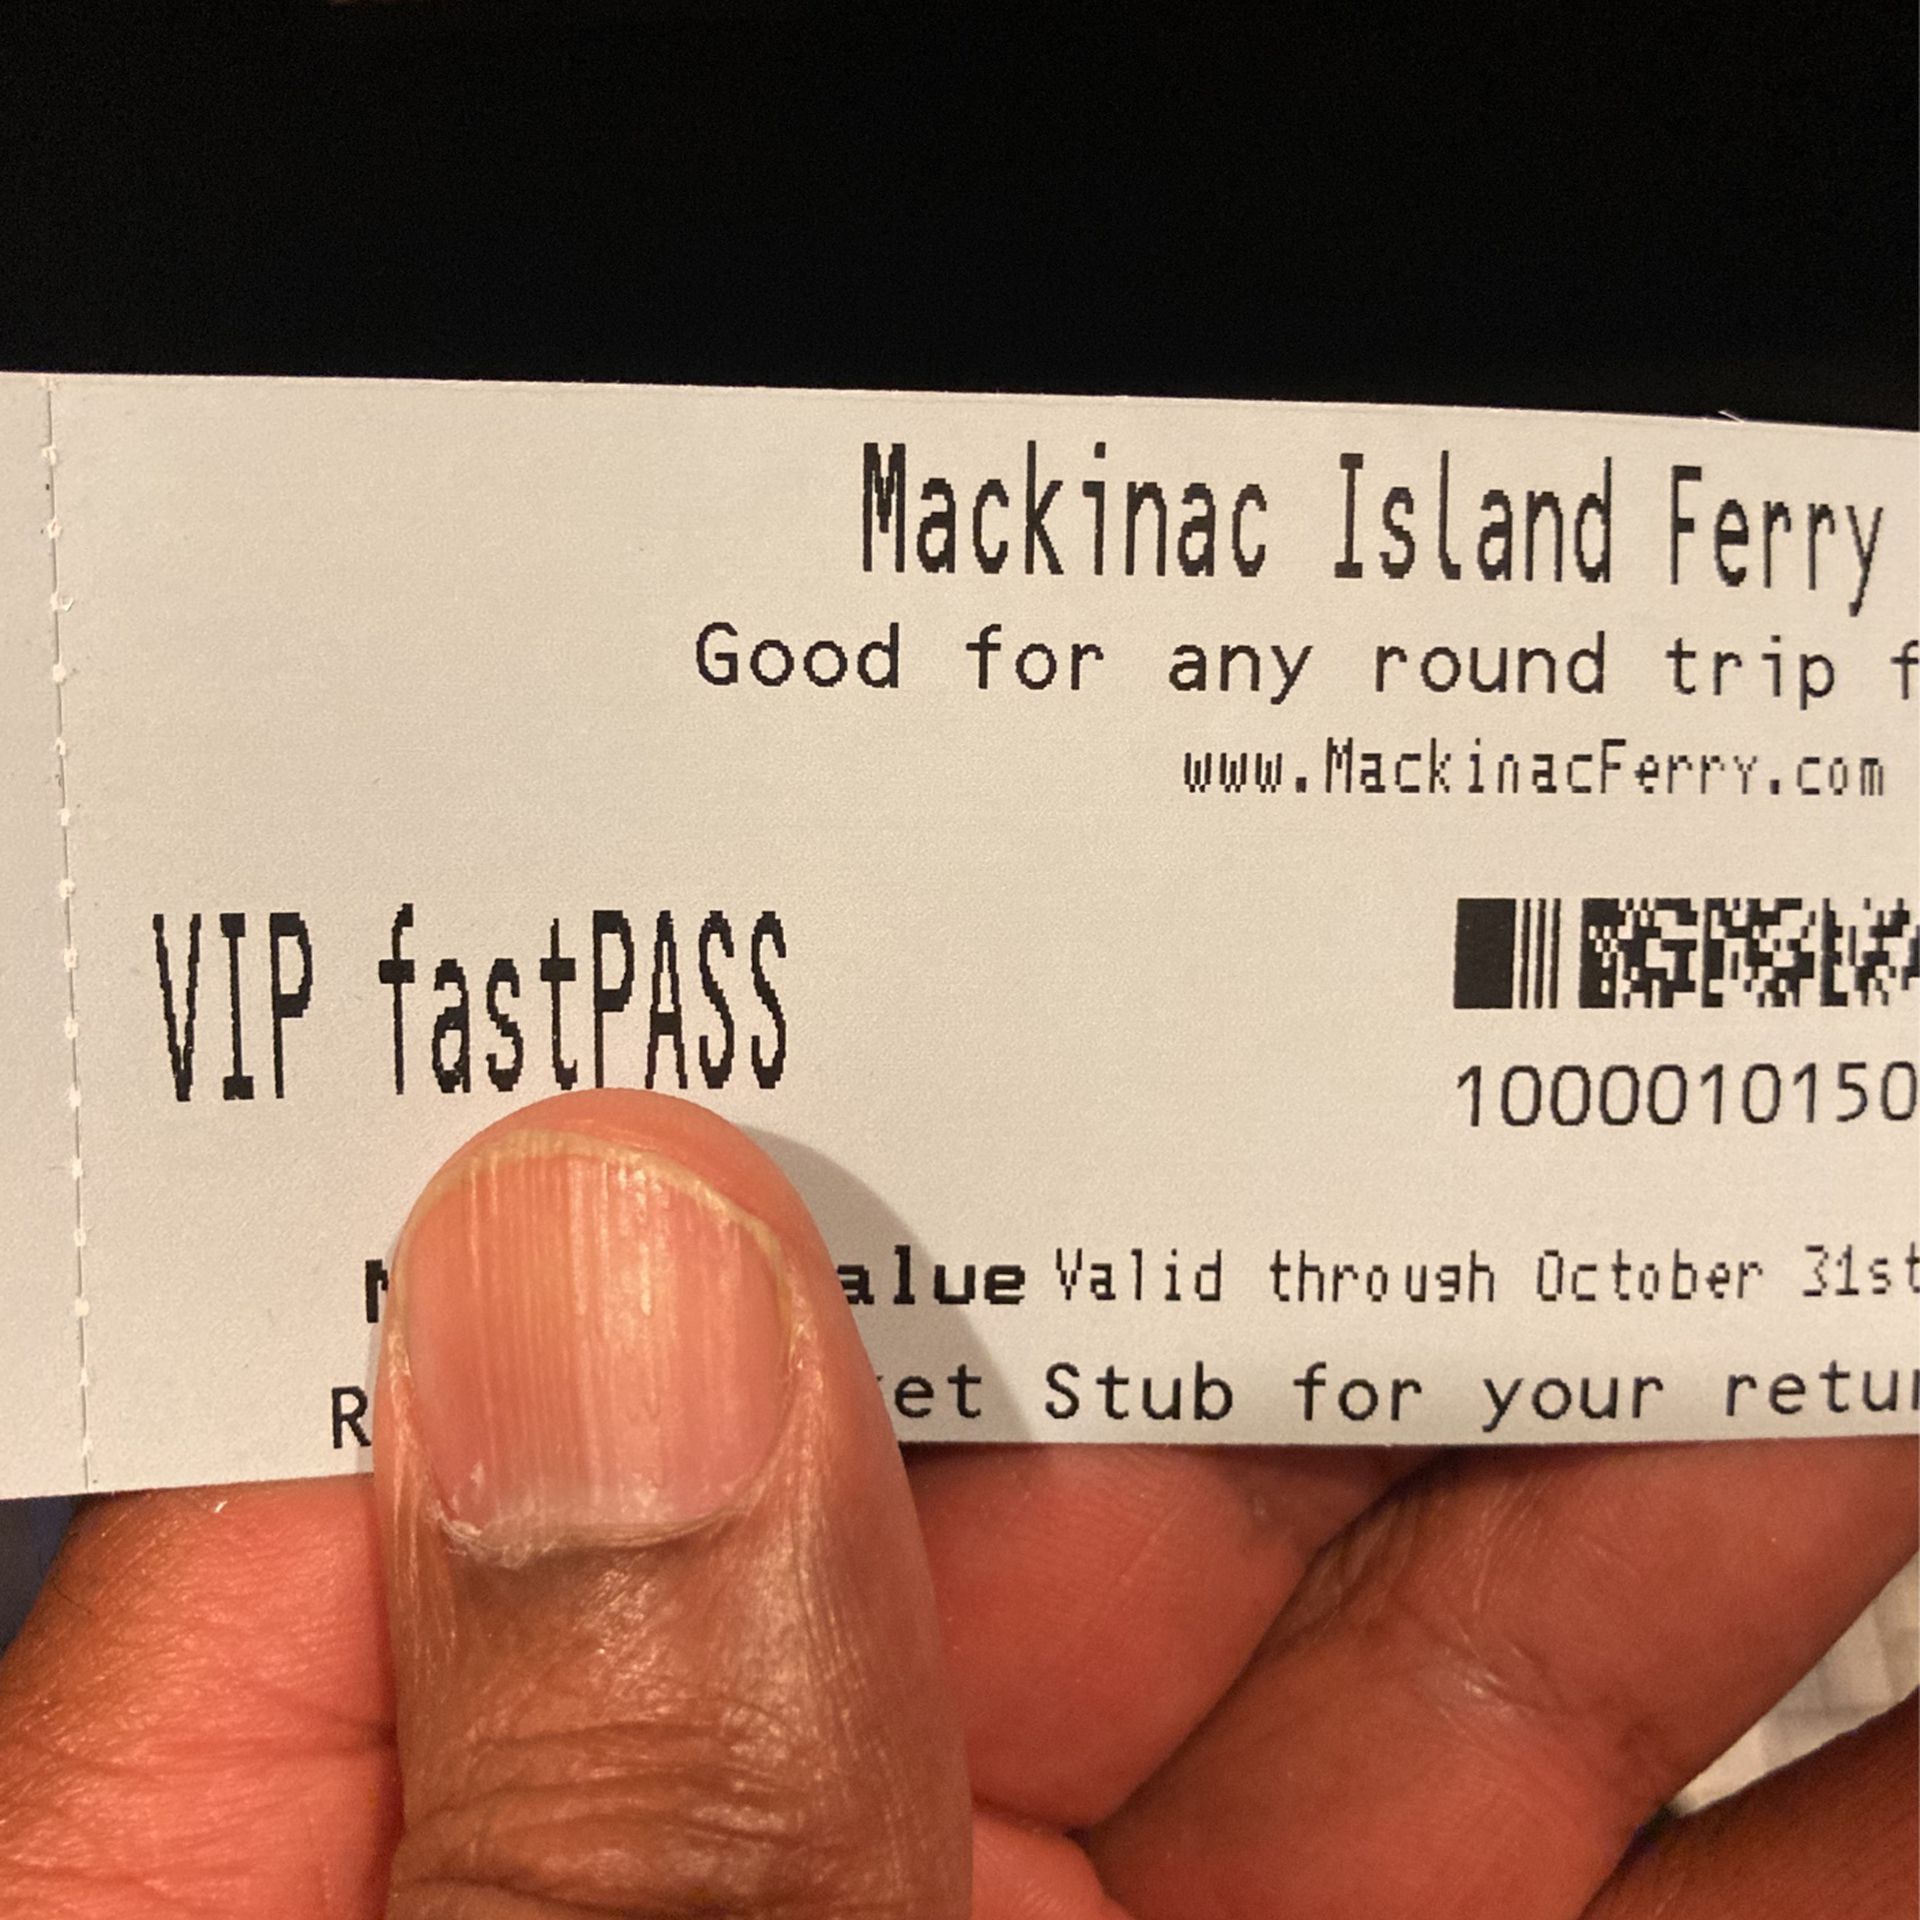 4 Ferry Tickets to Mackinac Island VIP Fast Pass